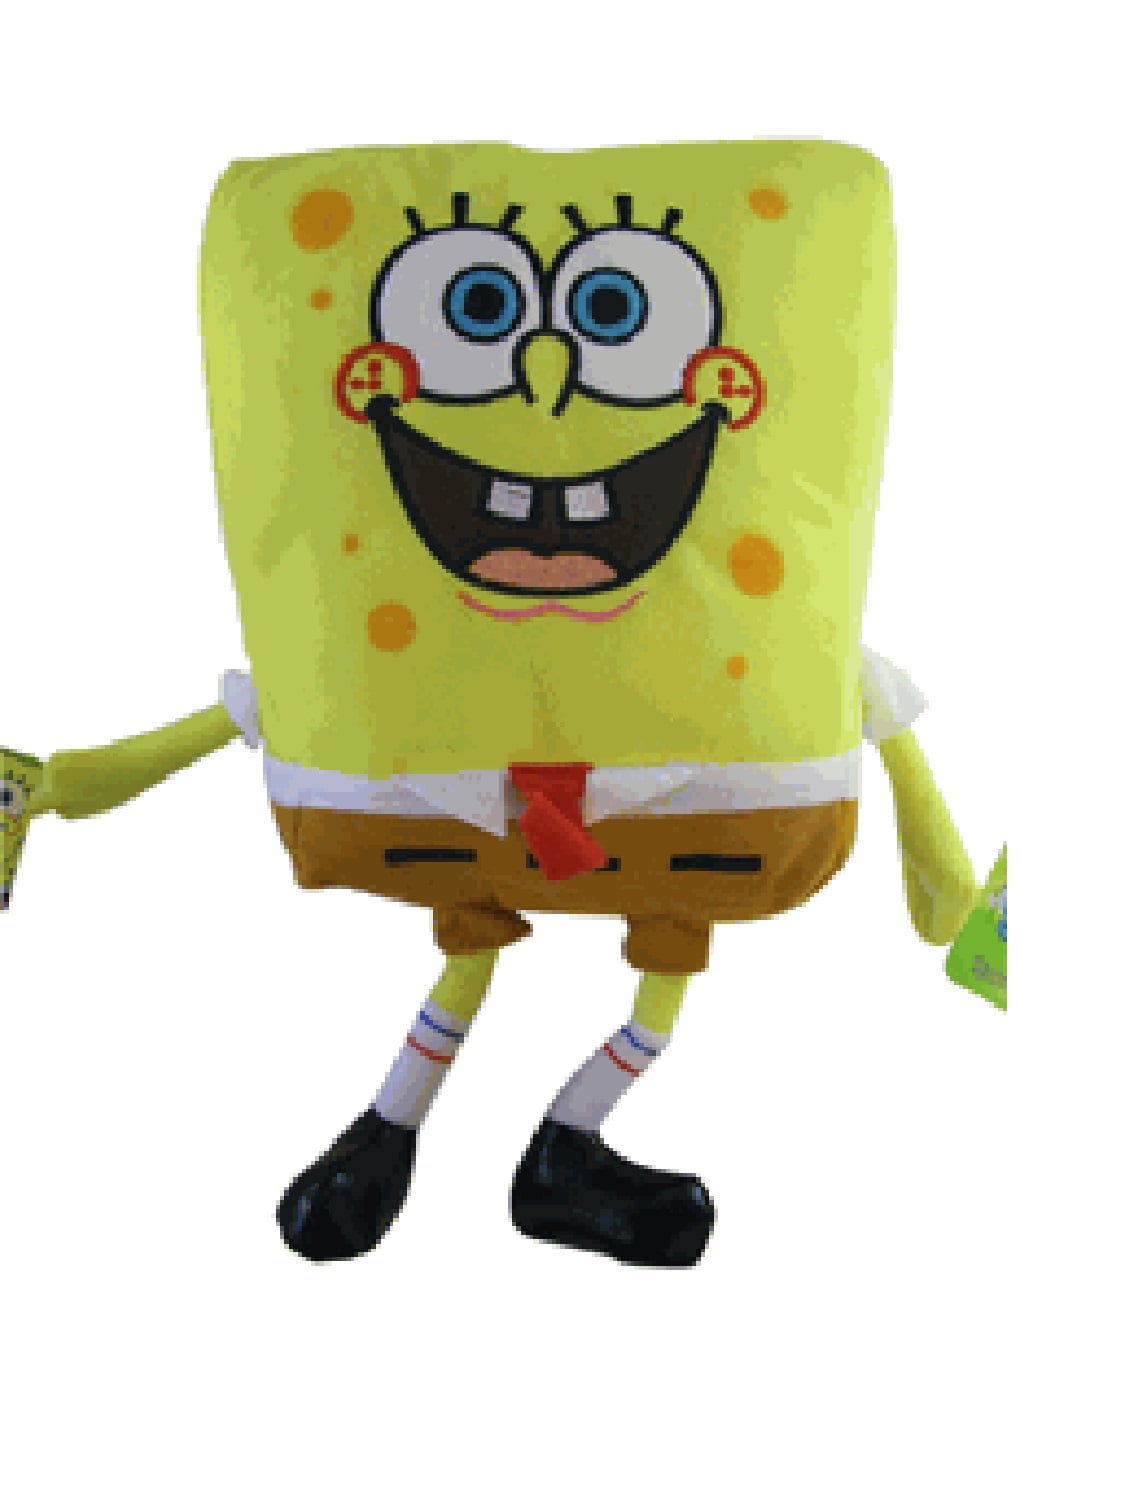 spongebob stuffed toys